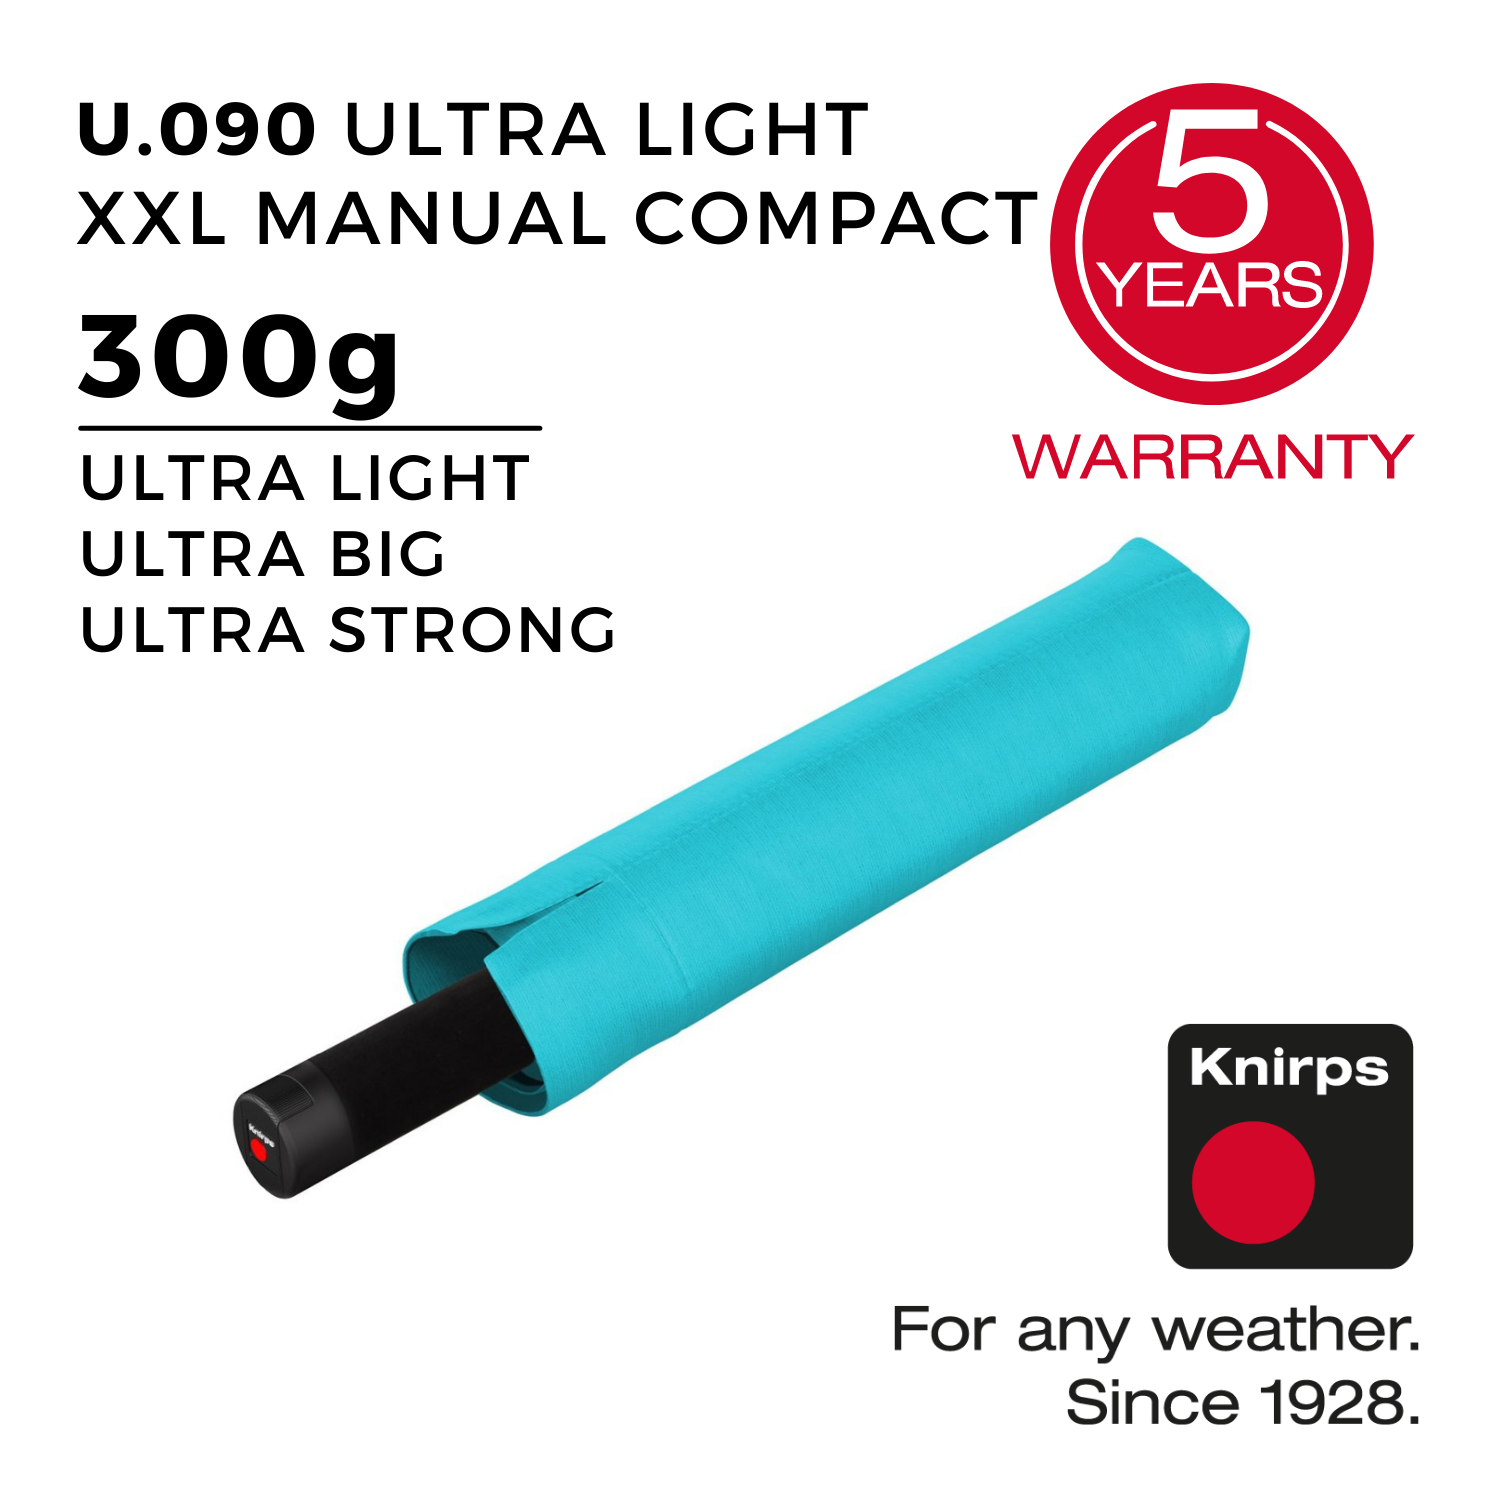 Buy Ultralight U.090 Traveller The Malaysia Planet & Manual - Umbrella- in Aqua Knirps XXL Singapore Compact